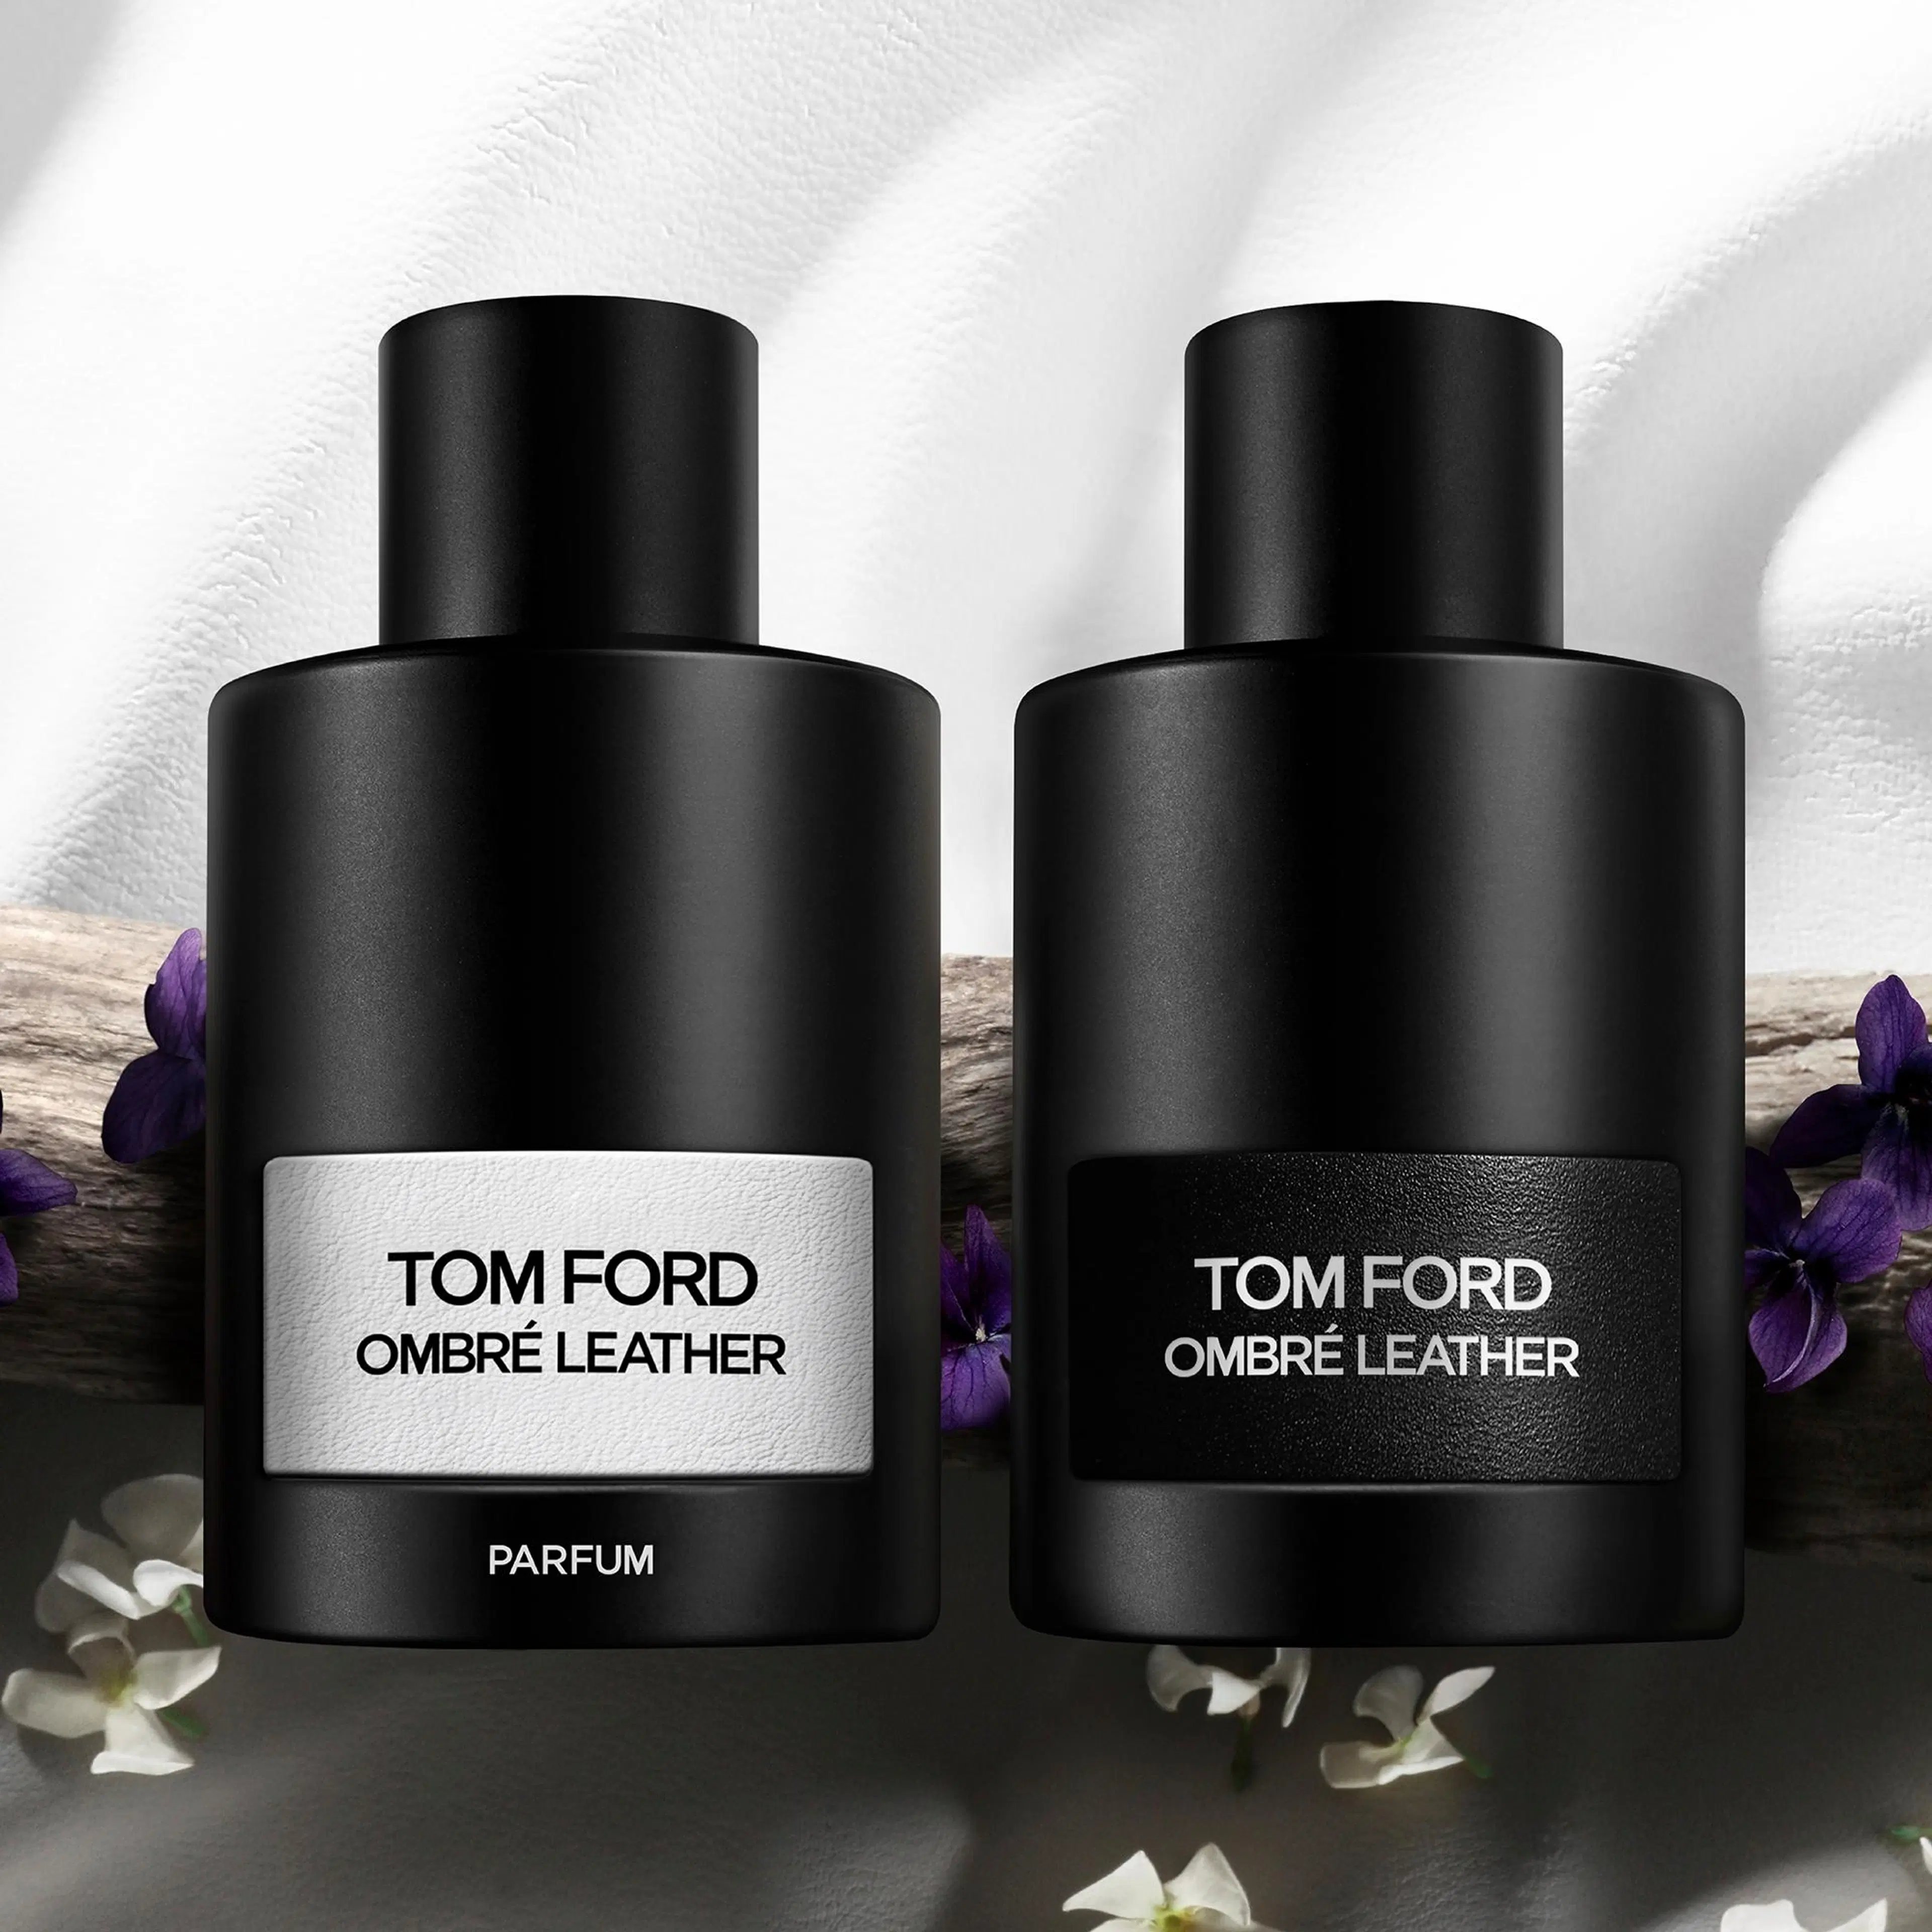 Tom Ford Ombre Leather Parfum tuoksu 100 ml